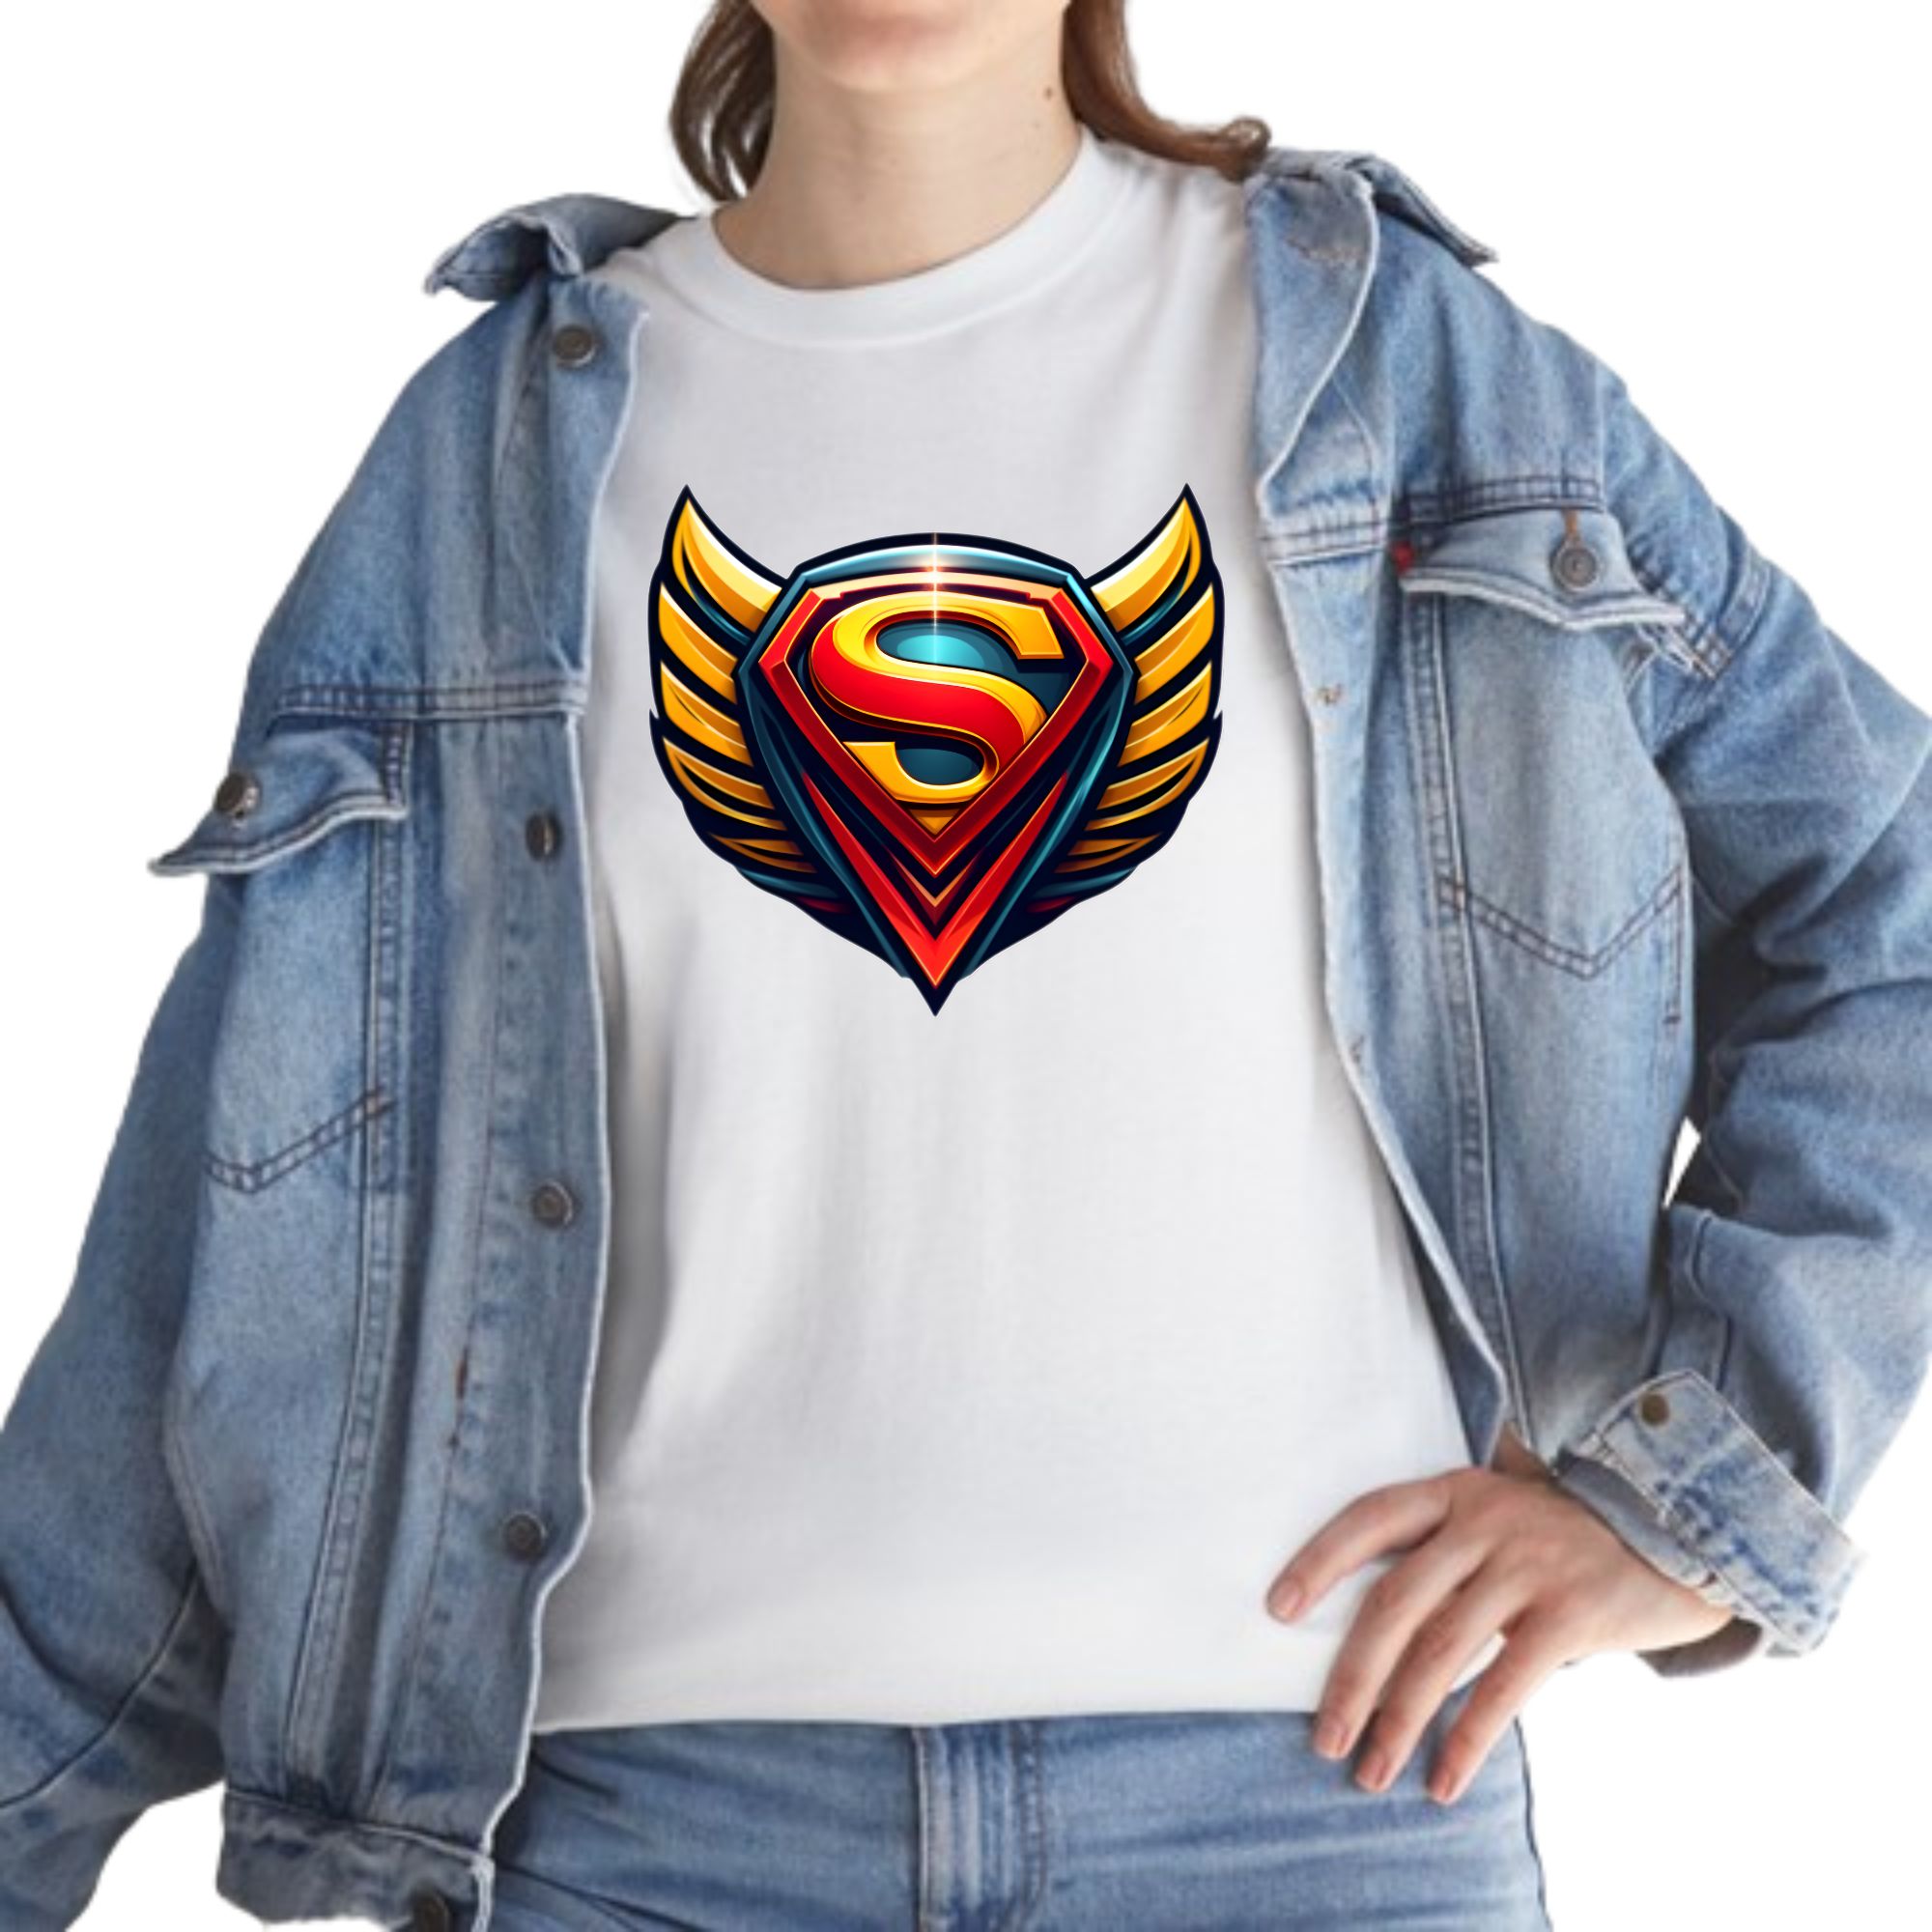 superhero T-shirt cover image.